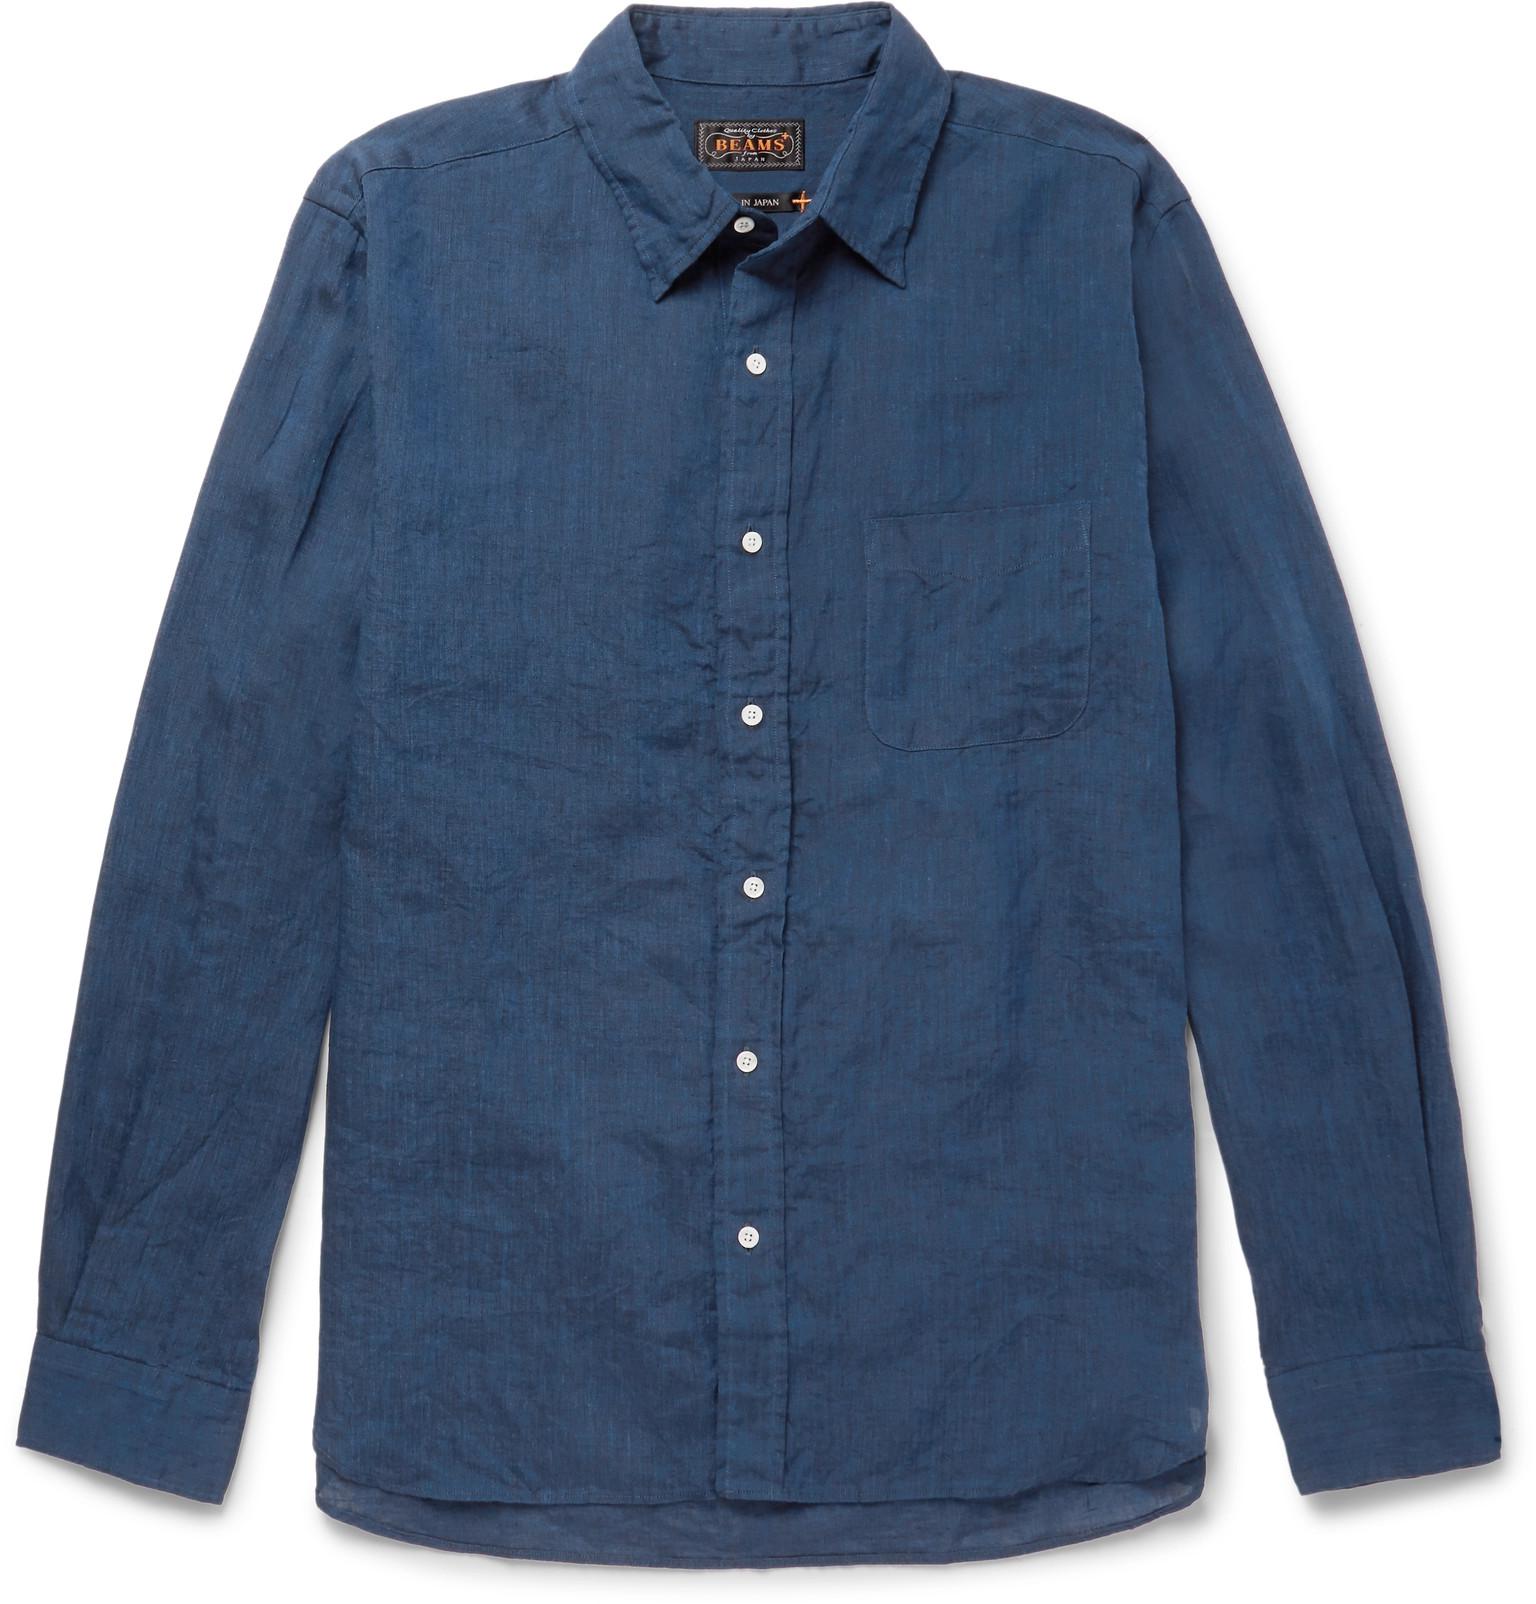 Beams Plus Linen Shirt in Blue for Men - Lyst